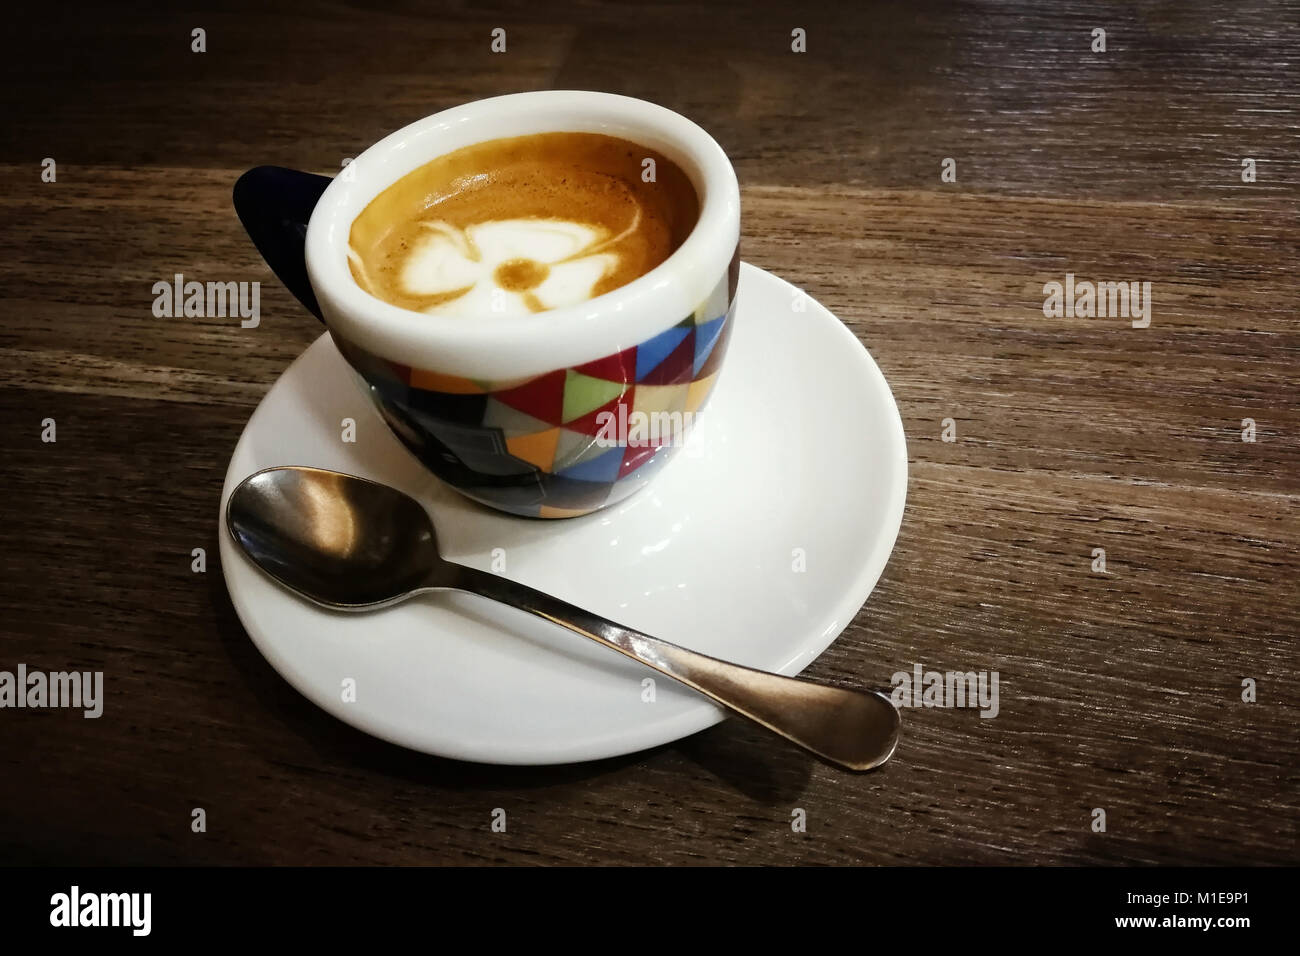 Espresso cup with milk foam flower, on wooden table. Italian coffee ...